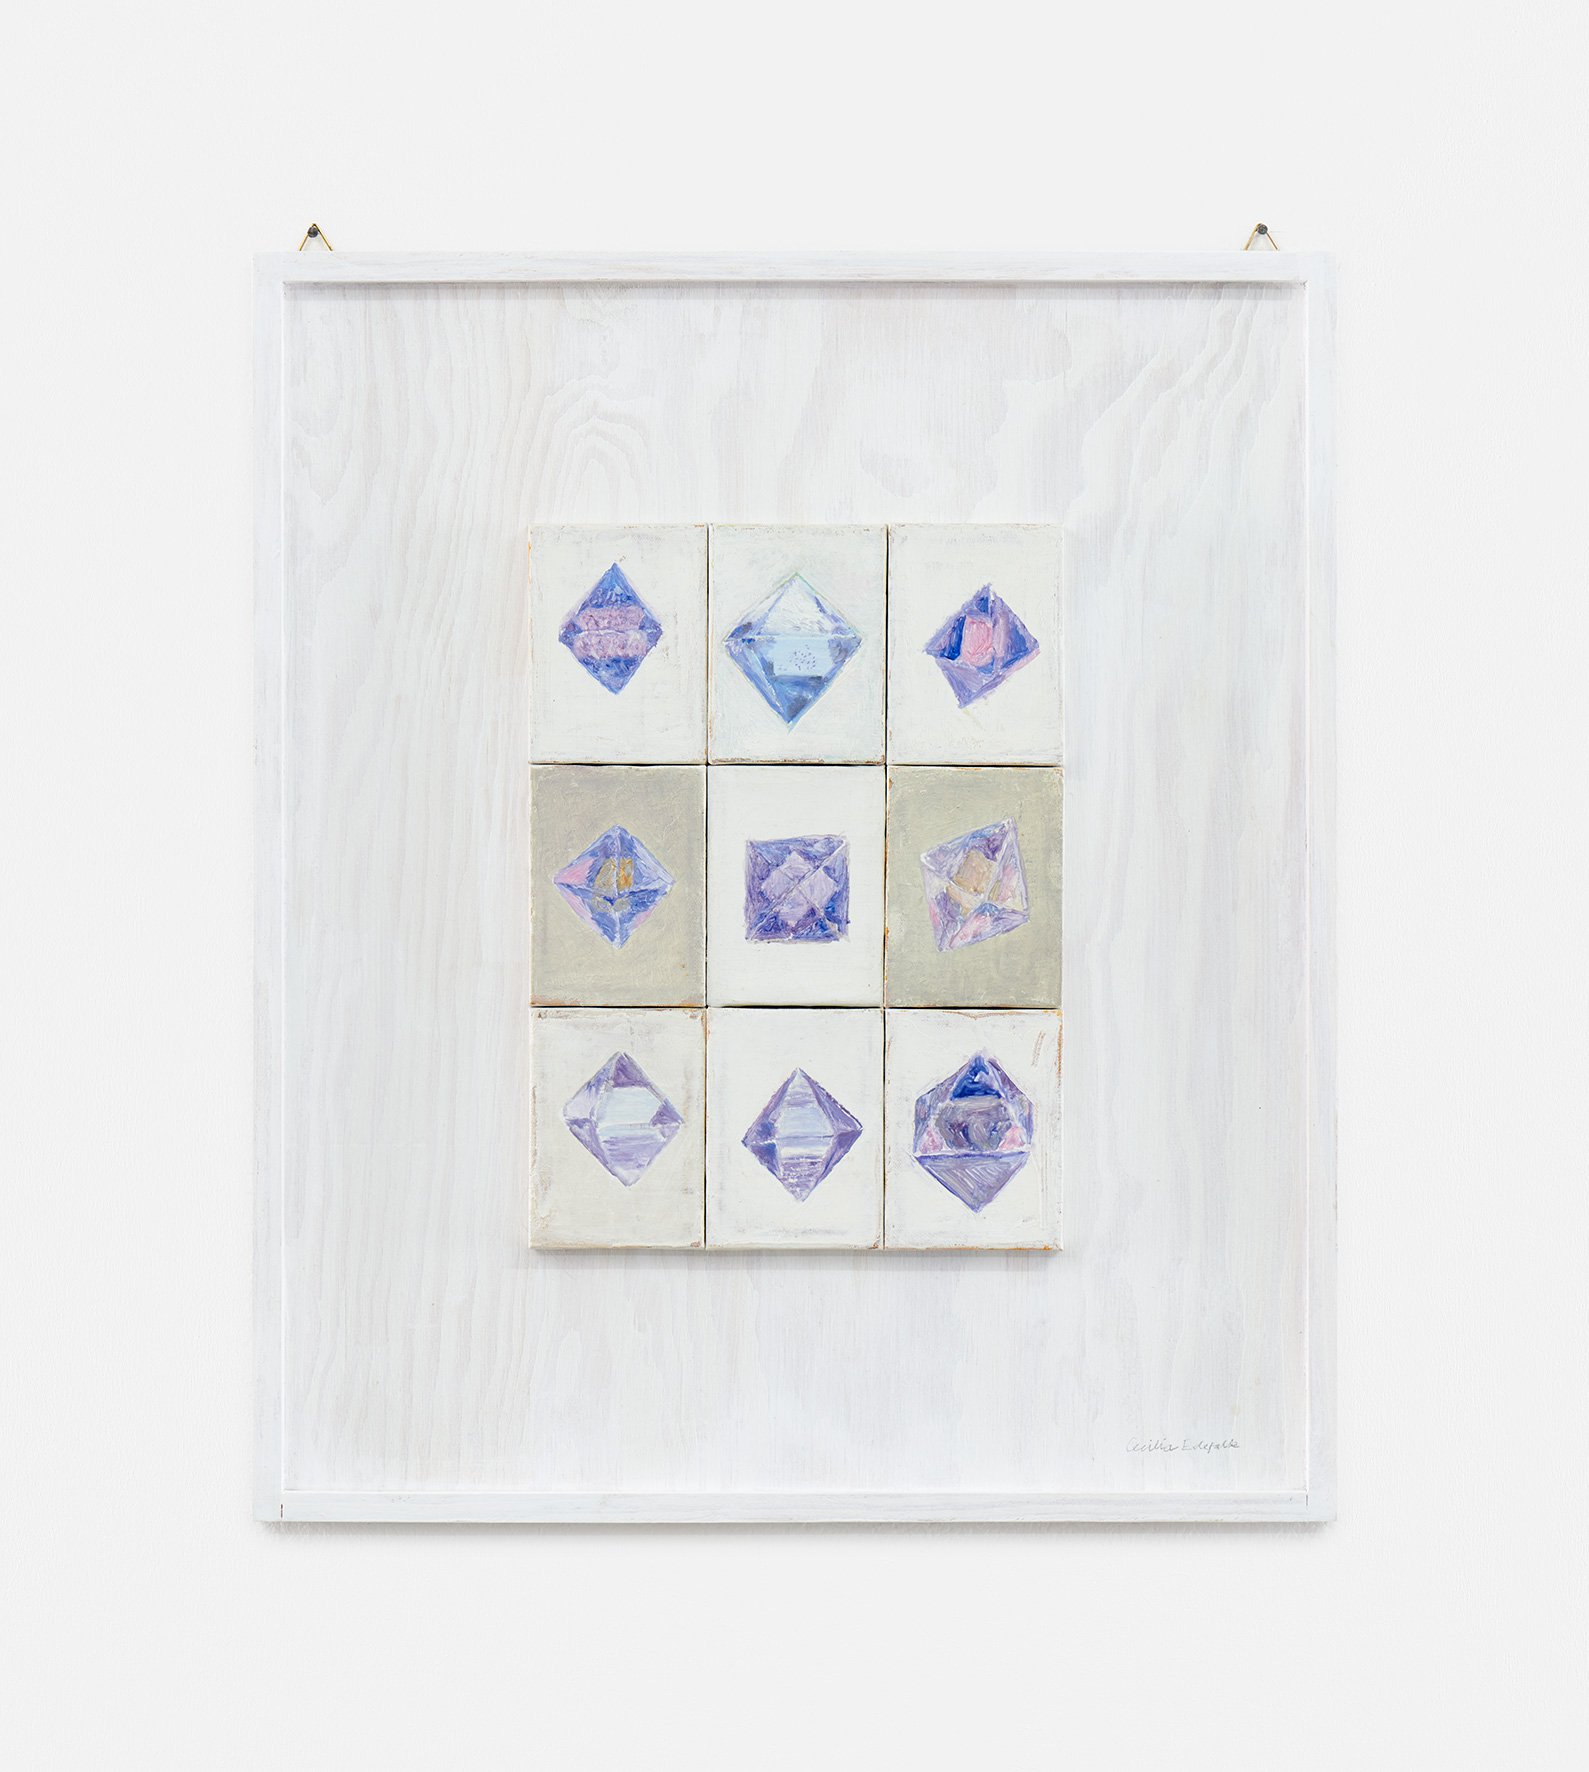 Cecilia Edefalk, Double pyramid/ Cristal, 2019 